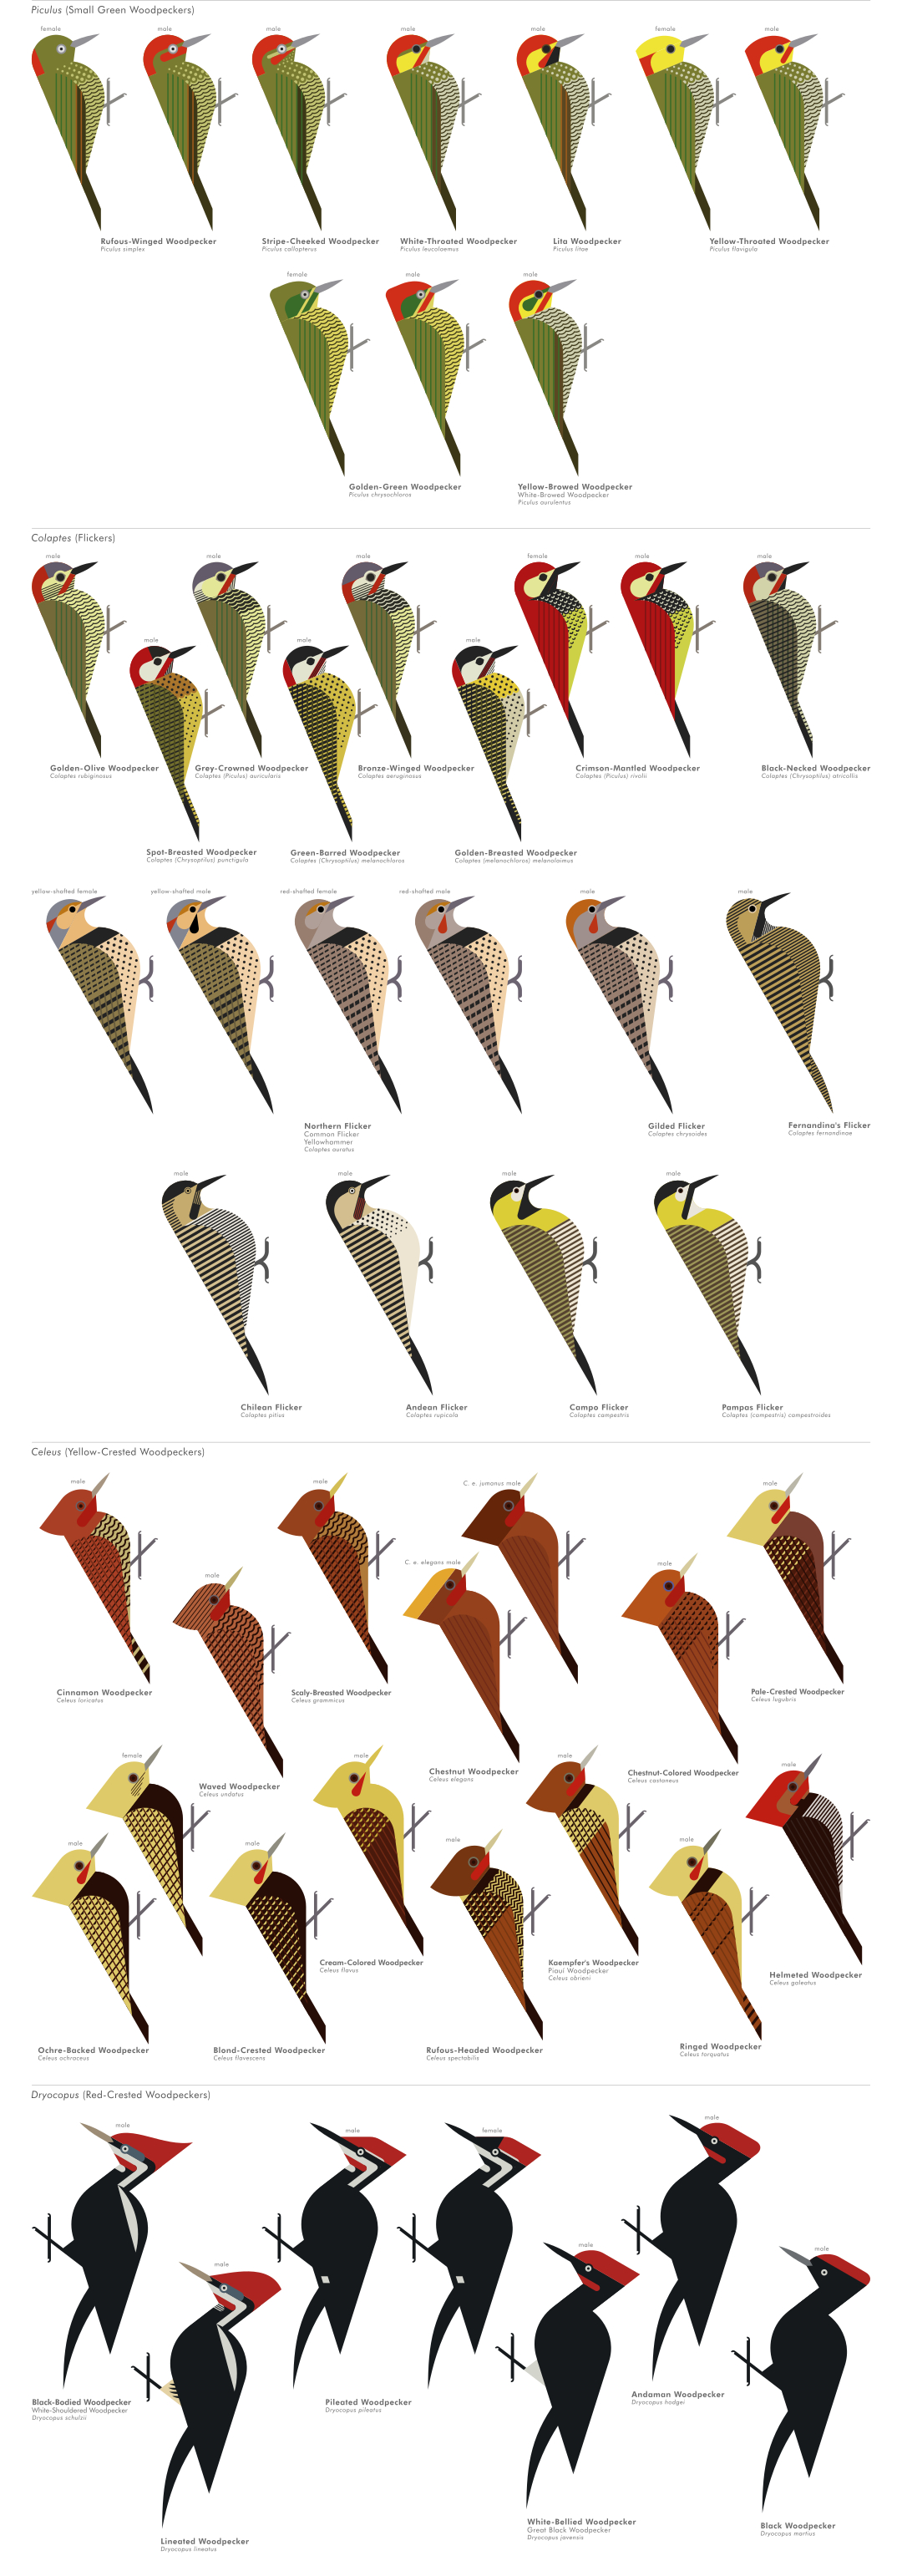 scott partridge - ave - avian vector encyclopedia - woodpeckers - piciformes - vector bird art